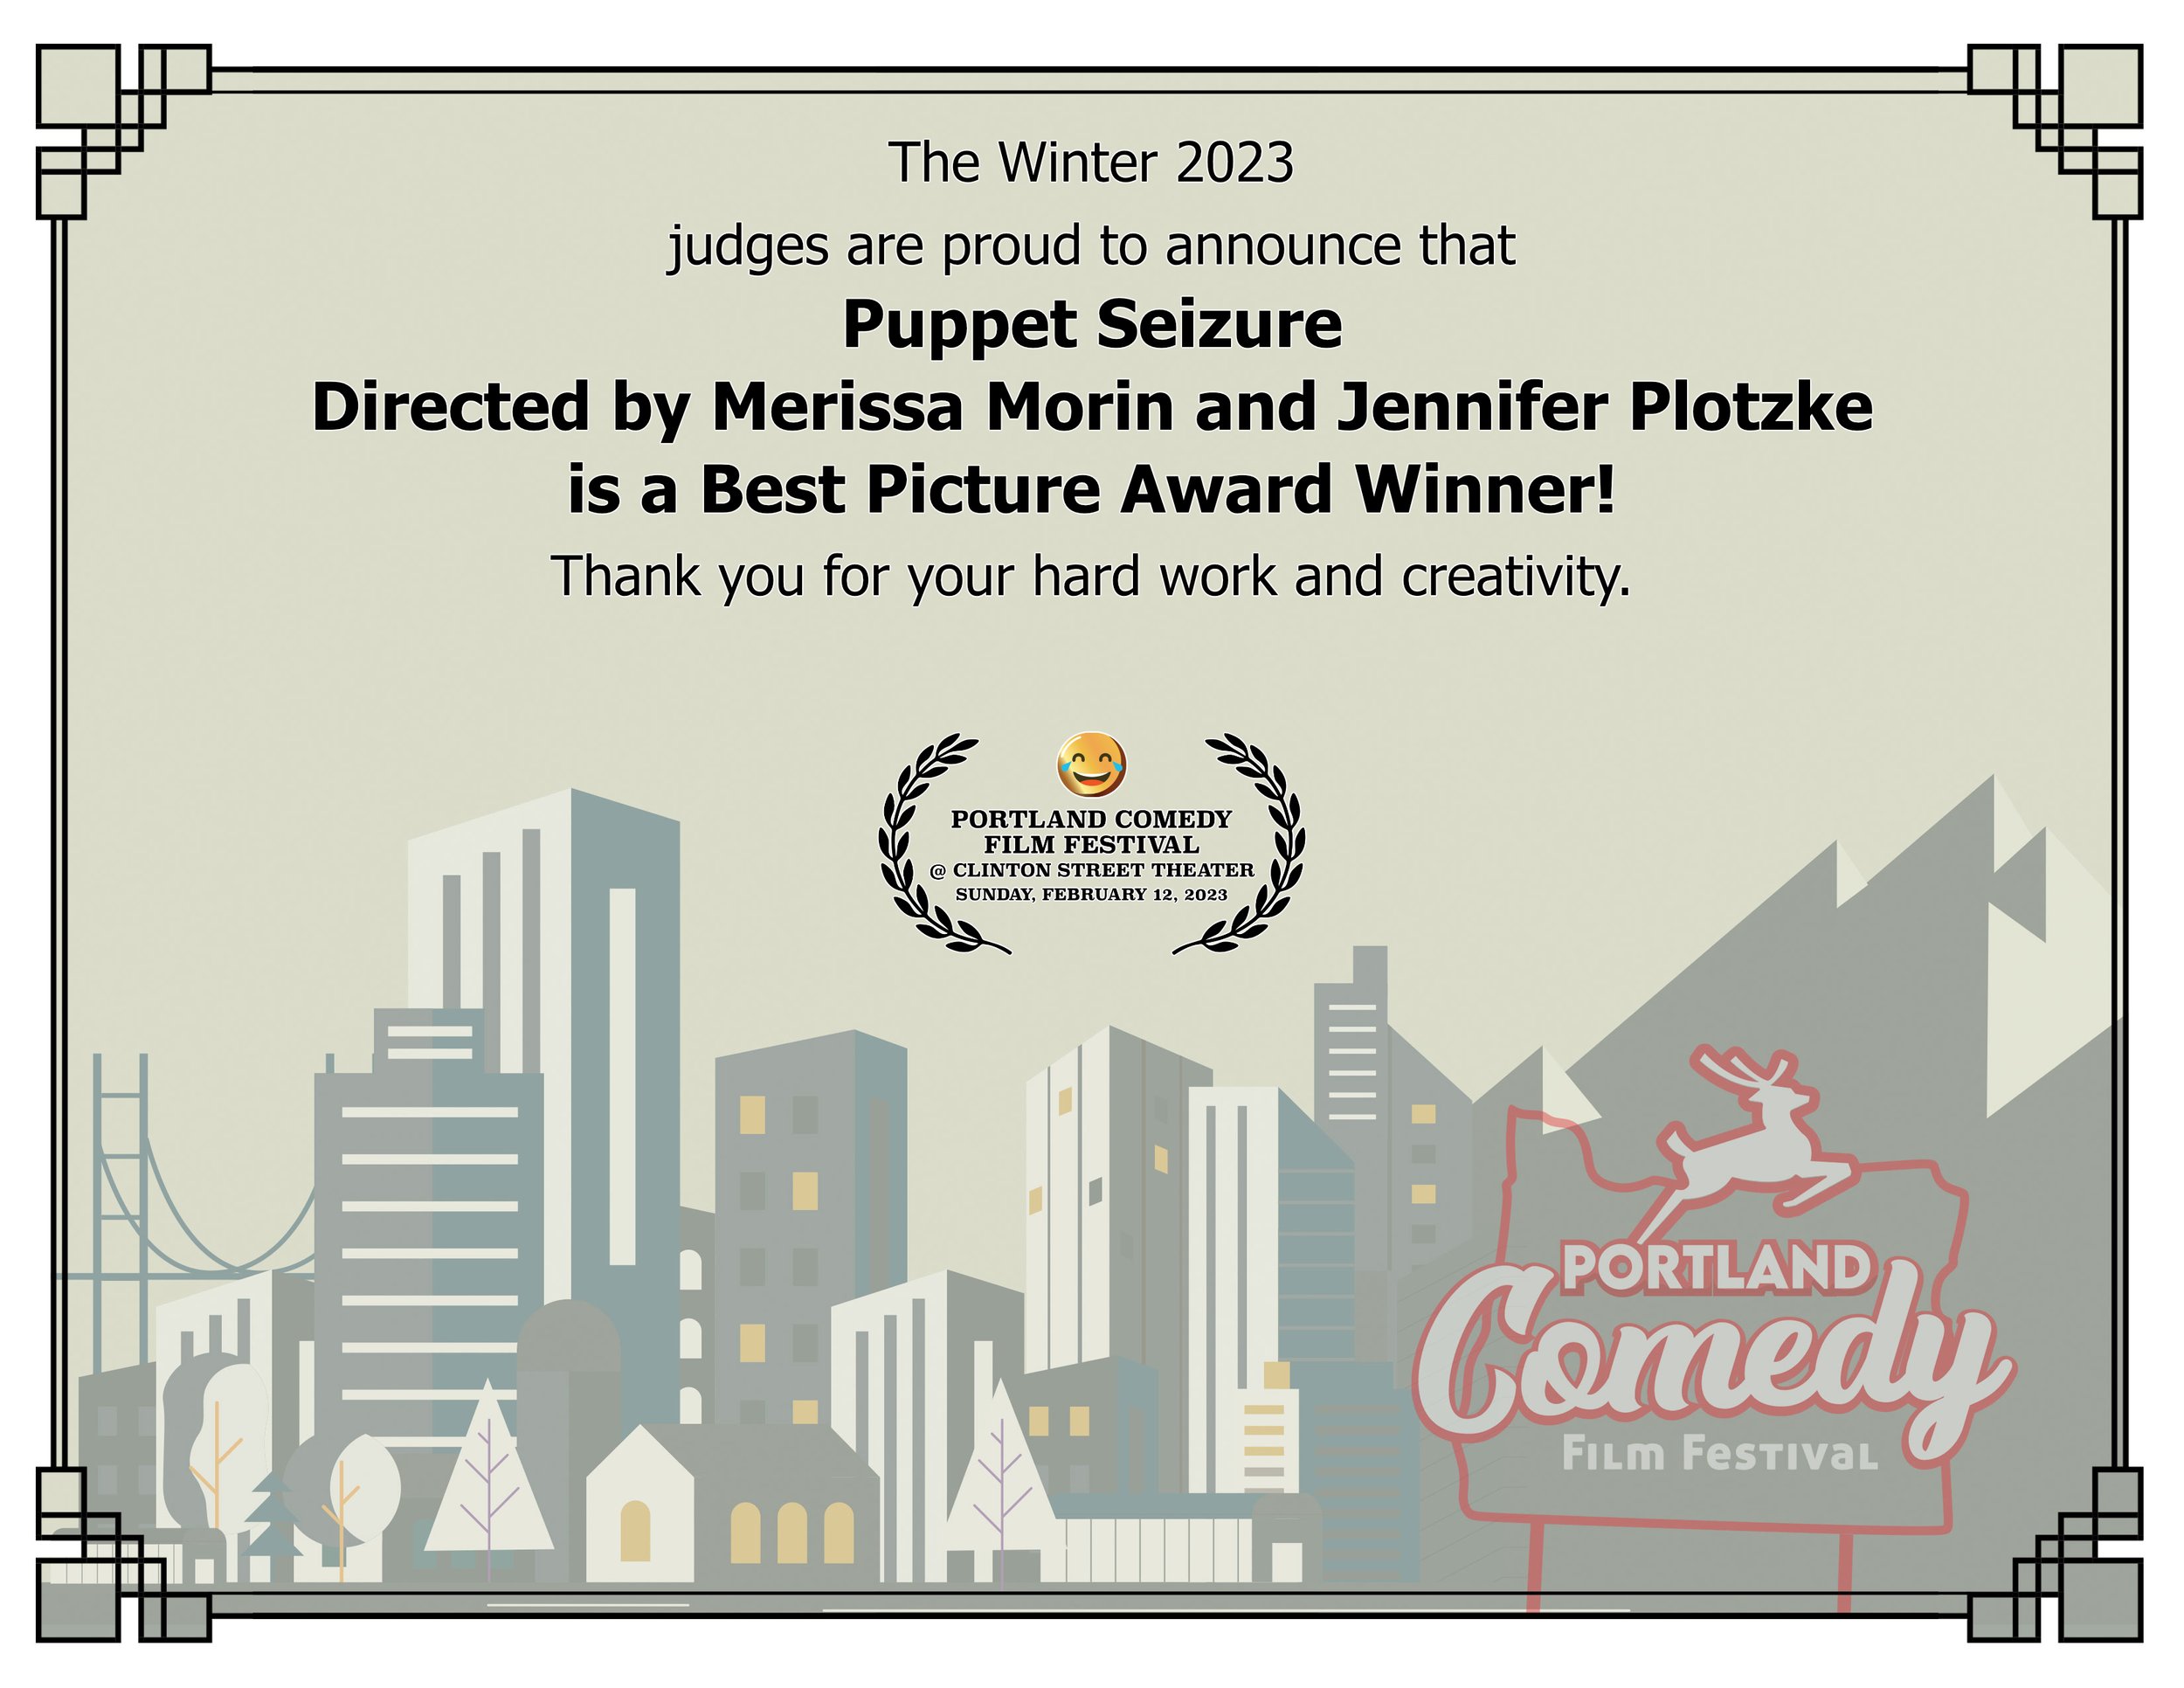 Portland Comedy Film Festival Winter 2023 Award Winner - Puppet Seizure 3.jpg